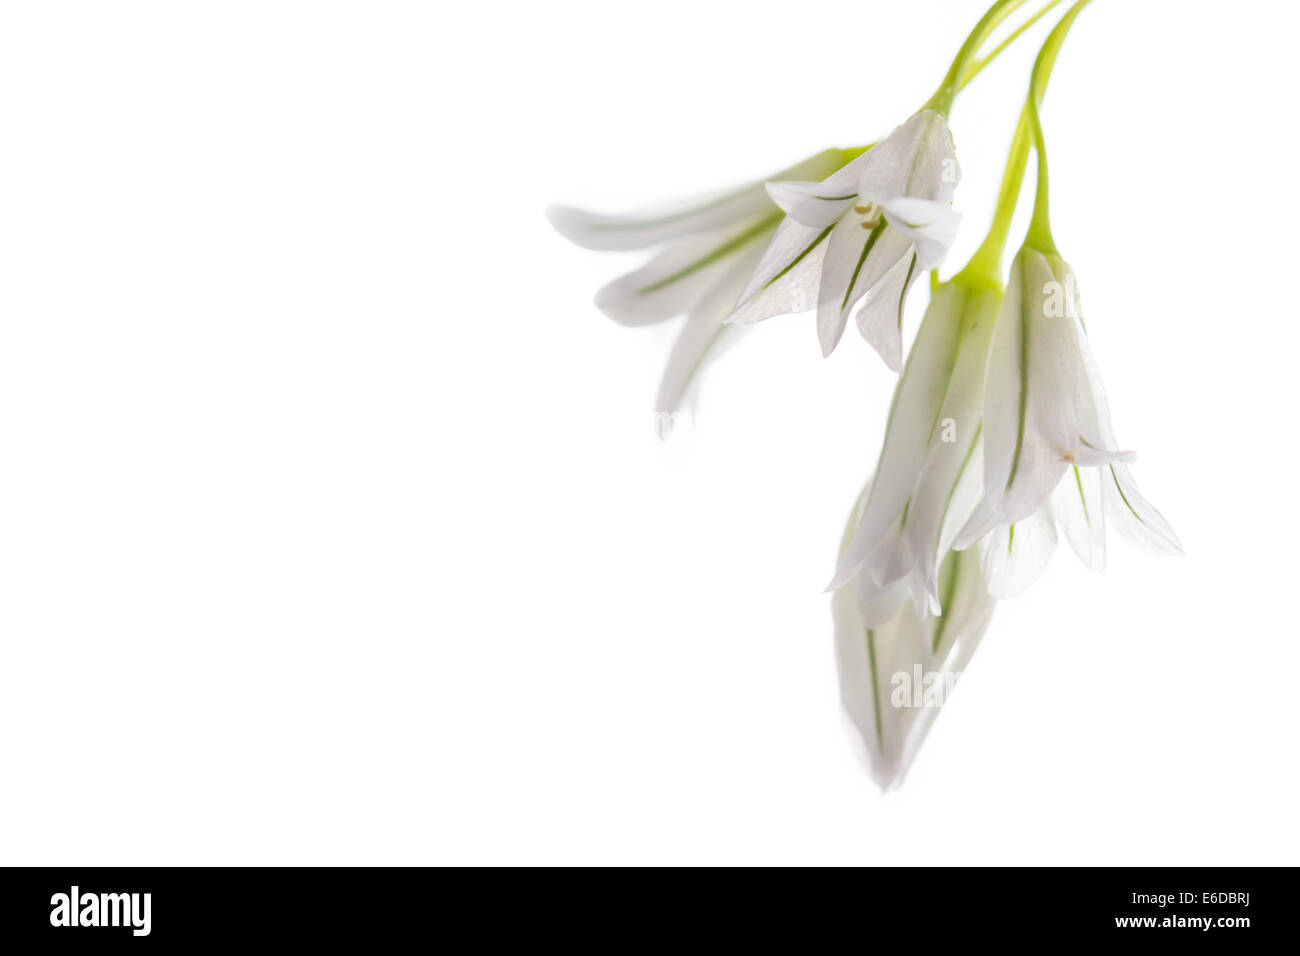 Three-cornered leek, Allium triquetrum, the white flower of this plant on a white background. Stock Photo